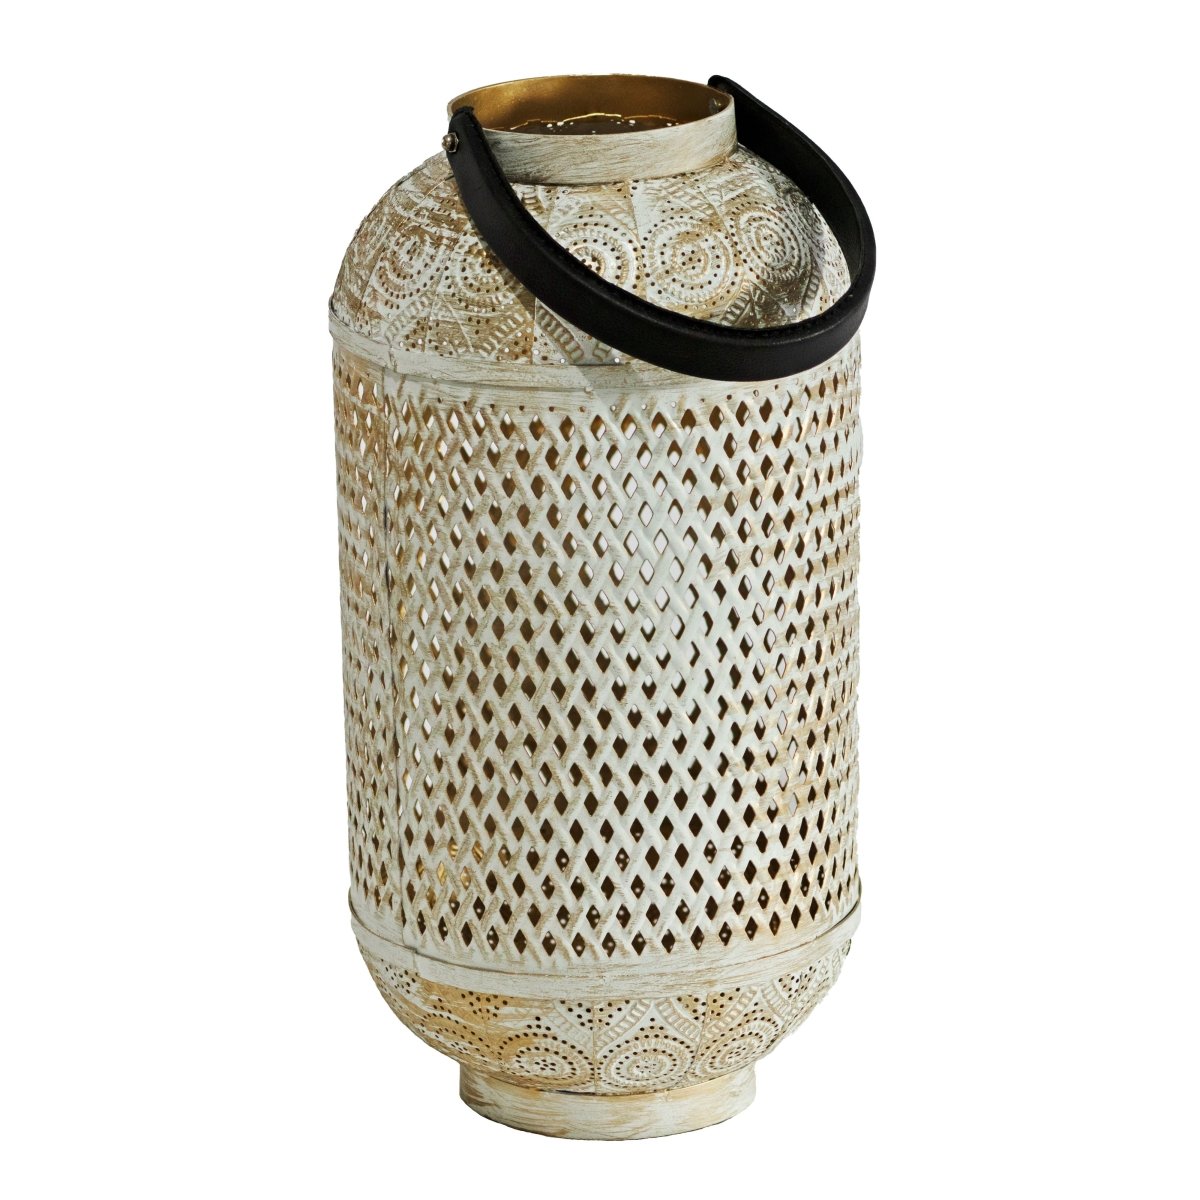 Kezevel Metal Table Decor Lantern - Hand Carved Golden and White Finish Decorative Candle Holder Lantern for Home Decor